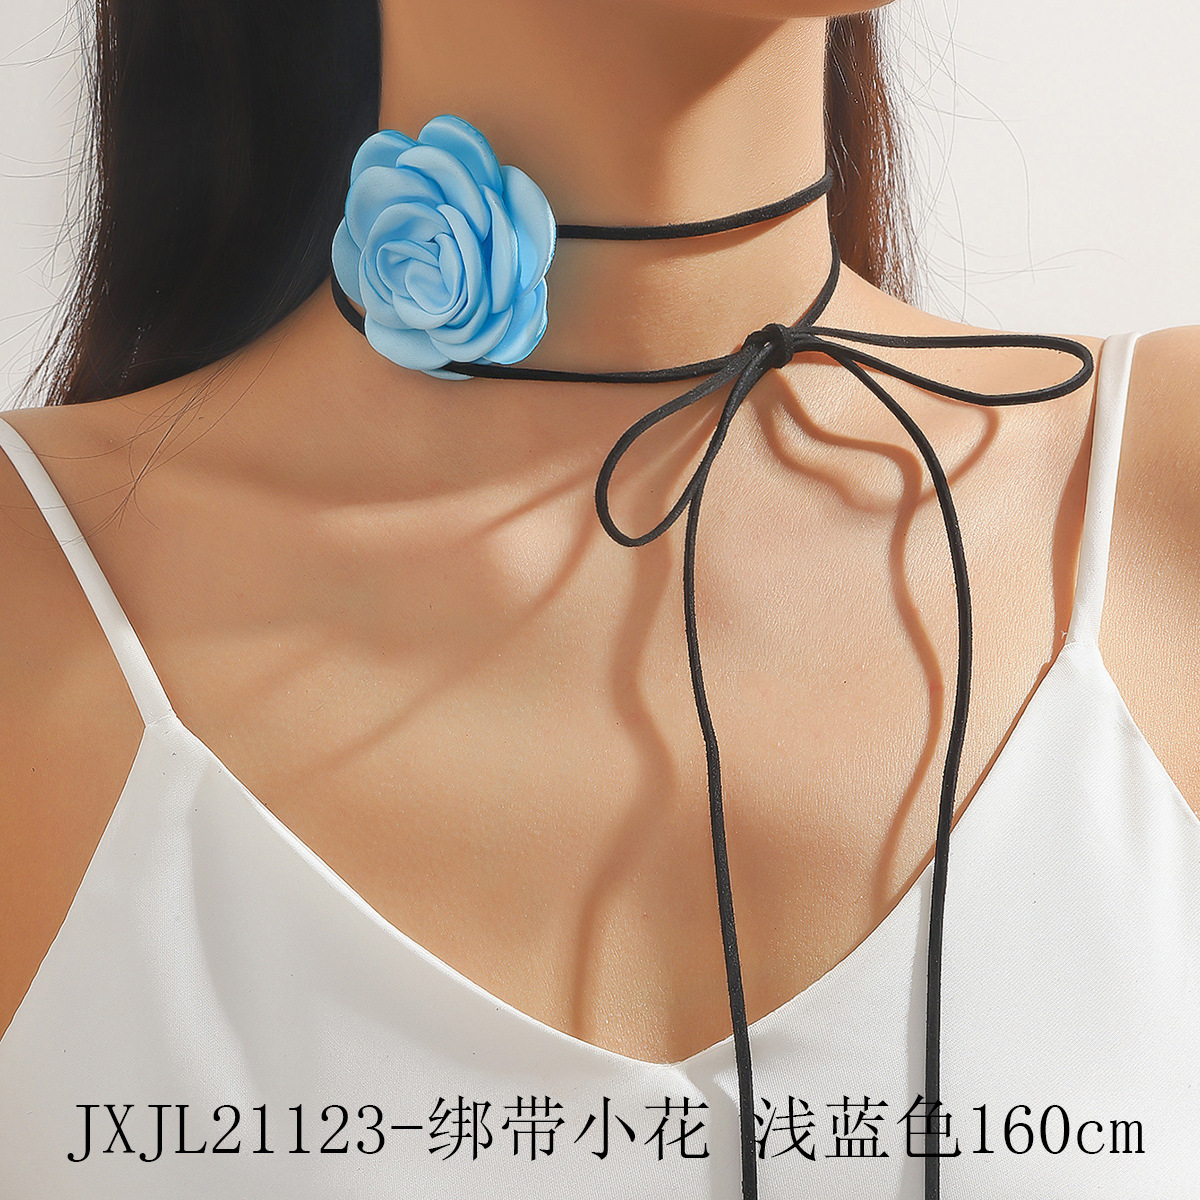 JXJL21123-绑带小花 浅蓝色160cm.jpg